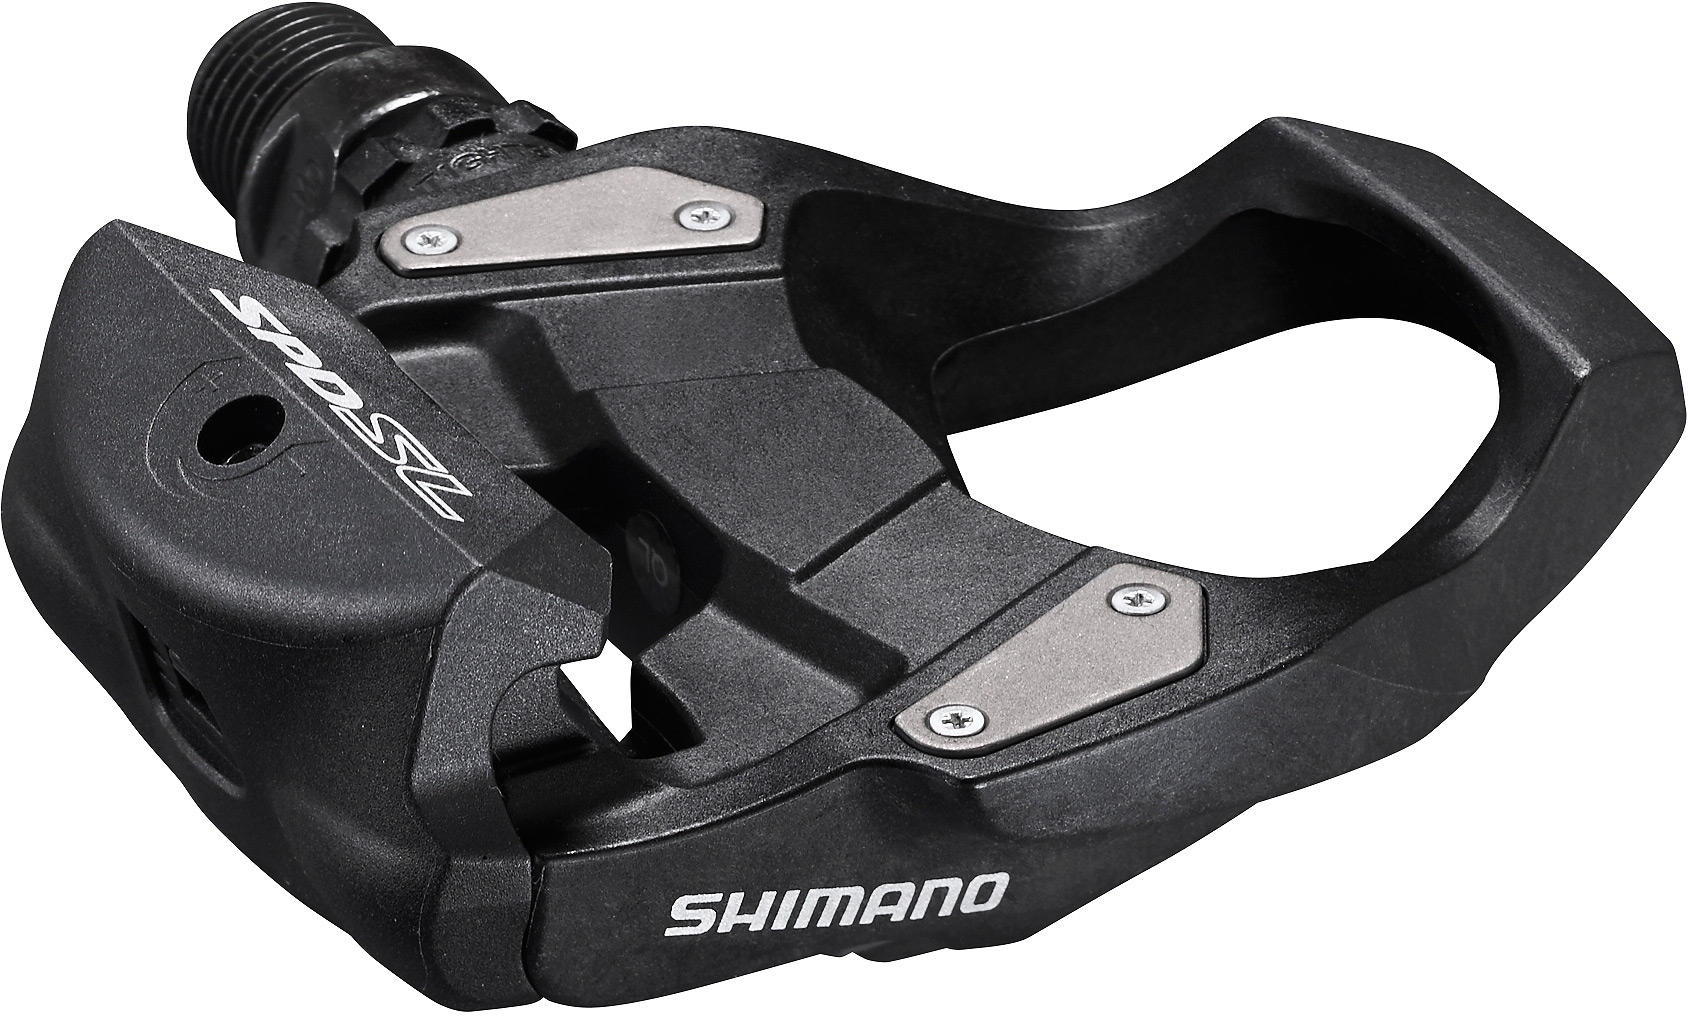 Shimano SPD SL Pedals - RS500 